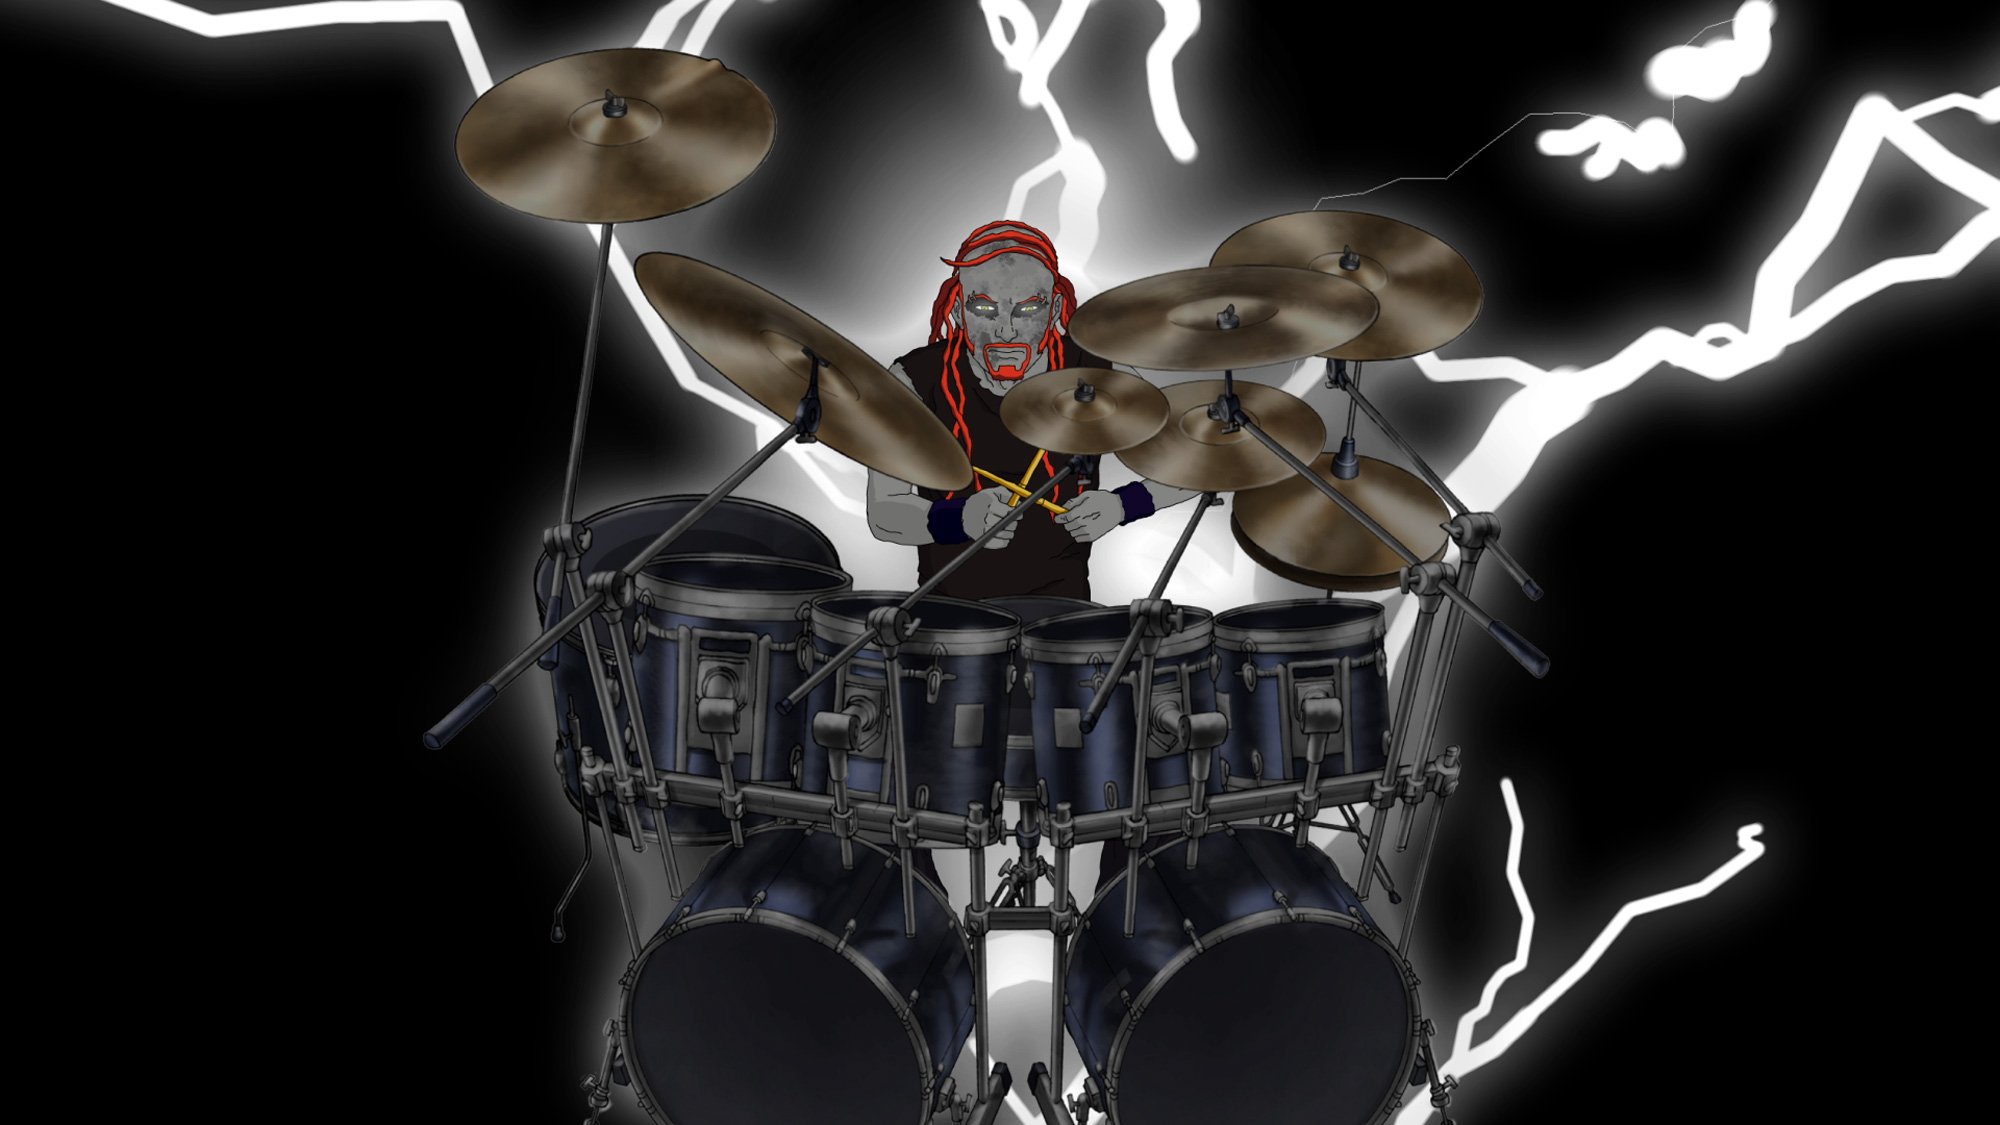  music cartoons hard rock band groups metalocalypse drums wallpaper